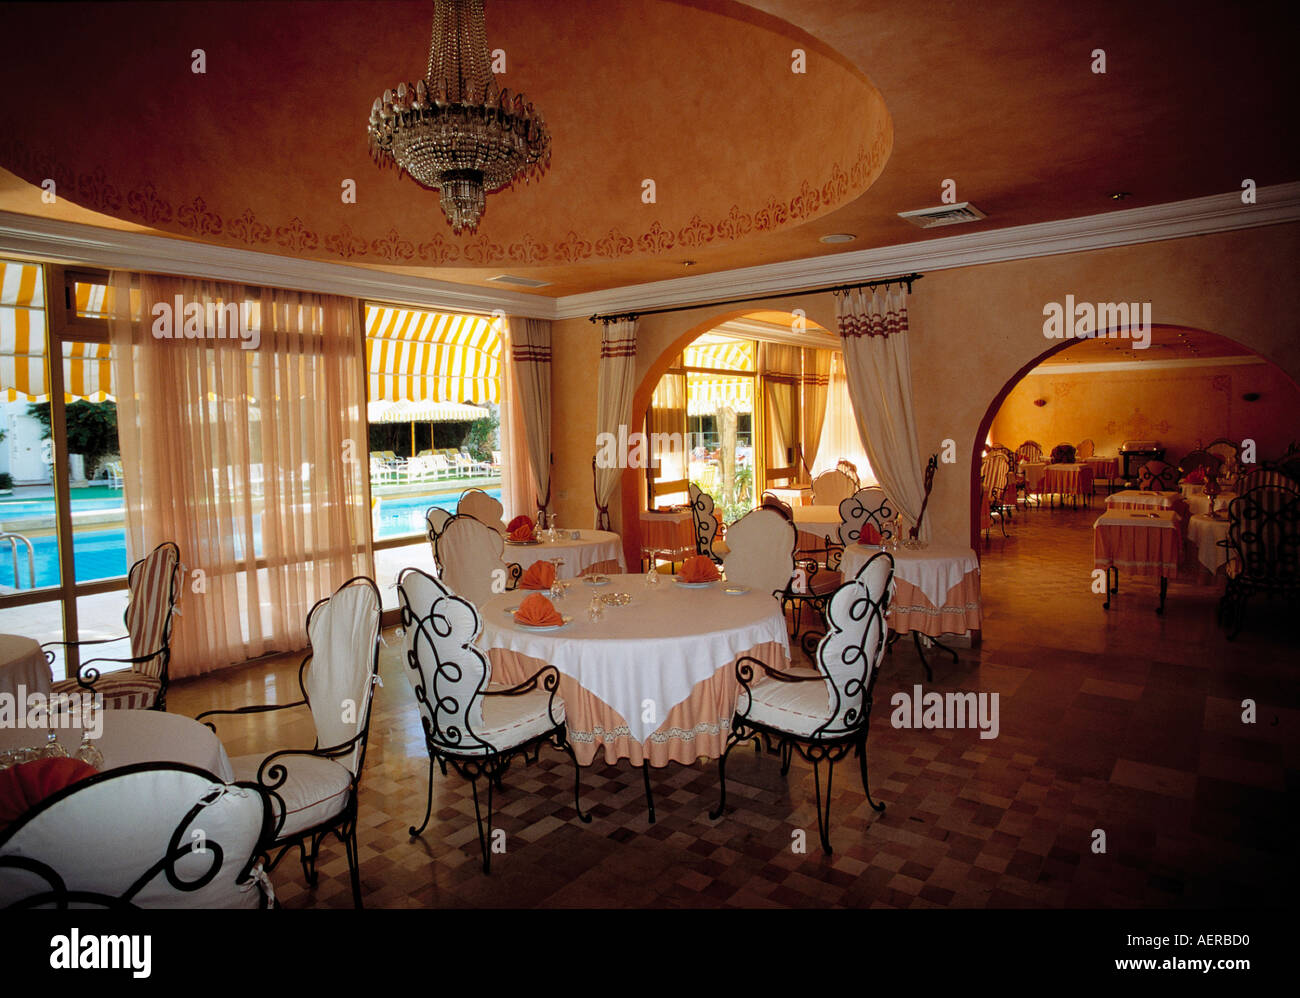 dininghall hotel sindbad city of hammamet tunisia Stock Photo